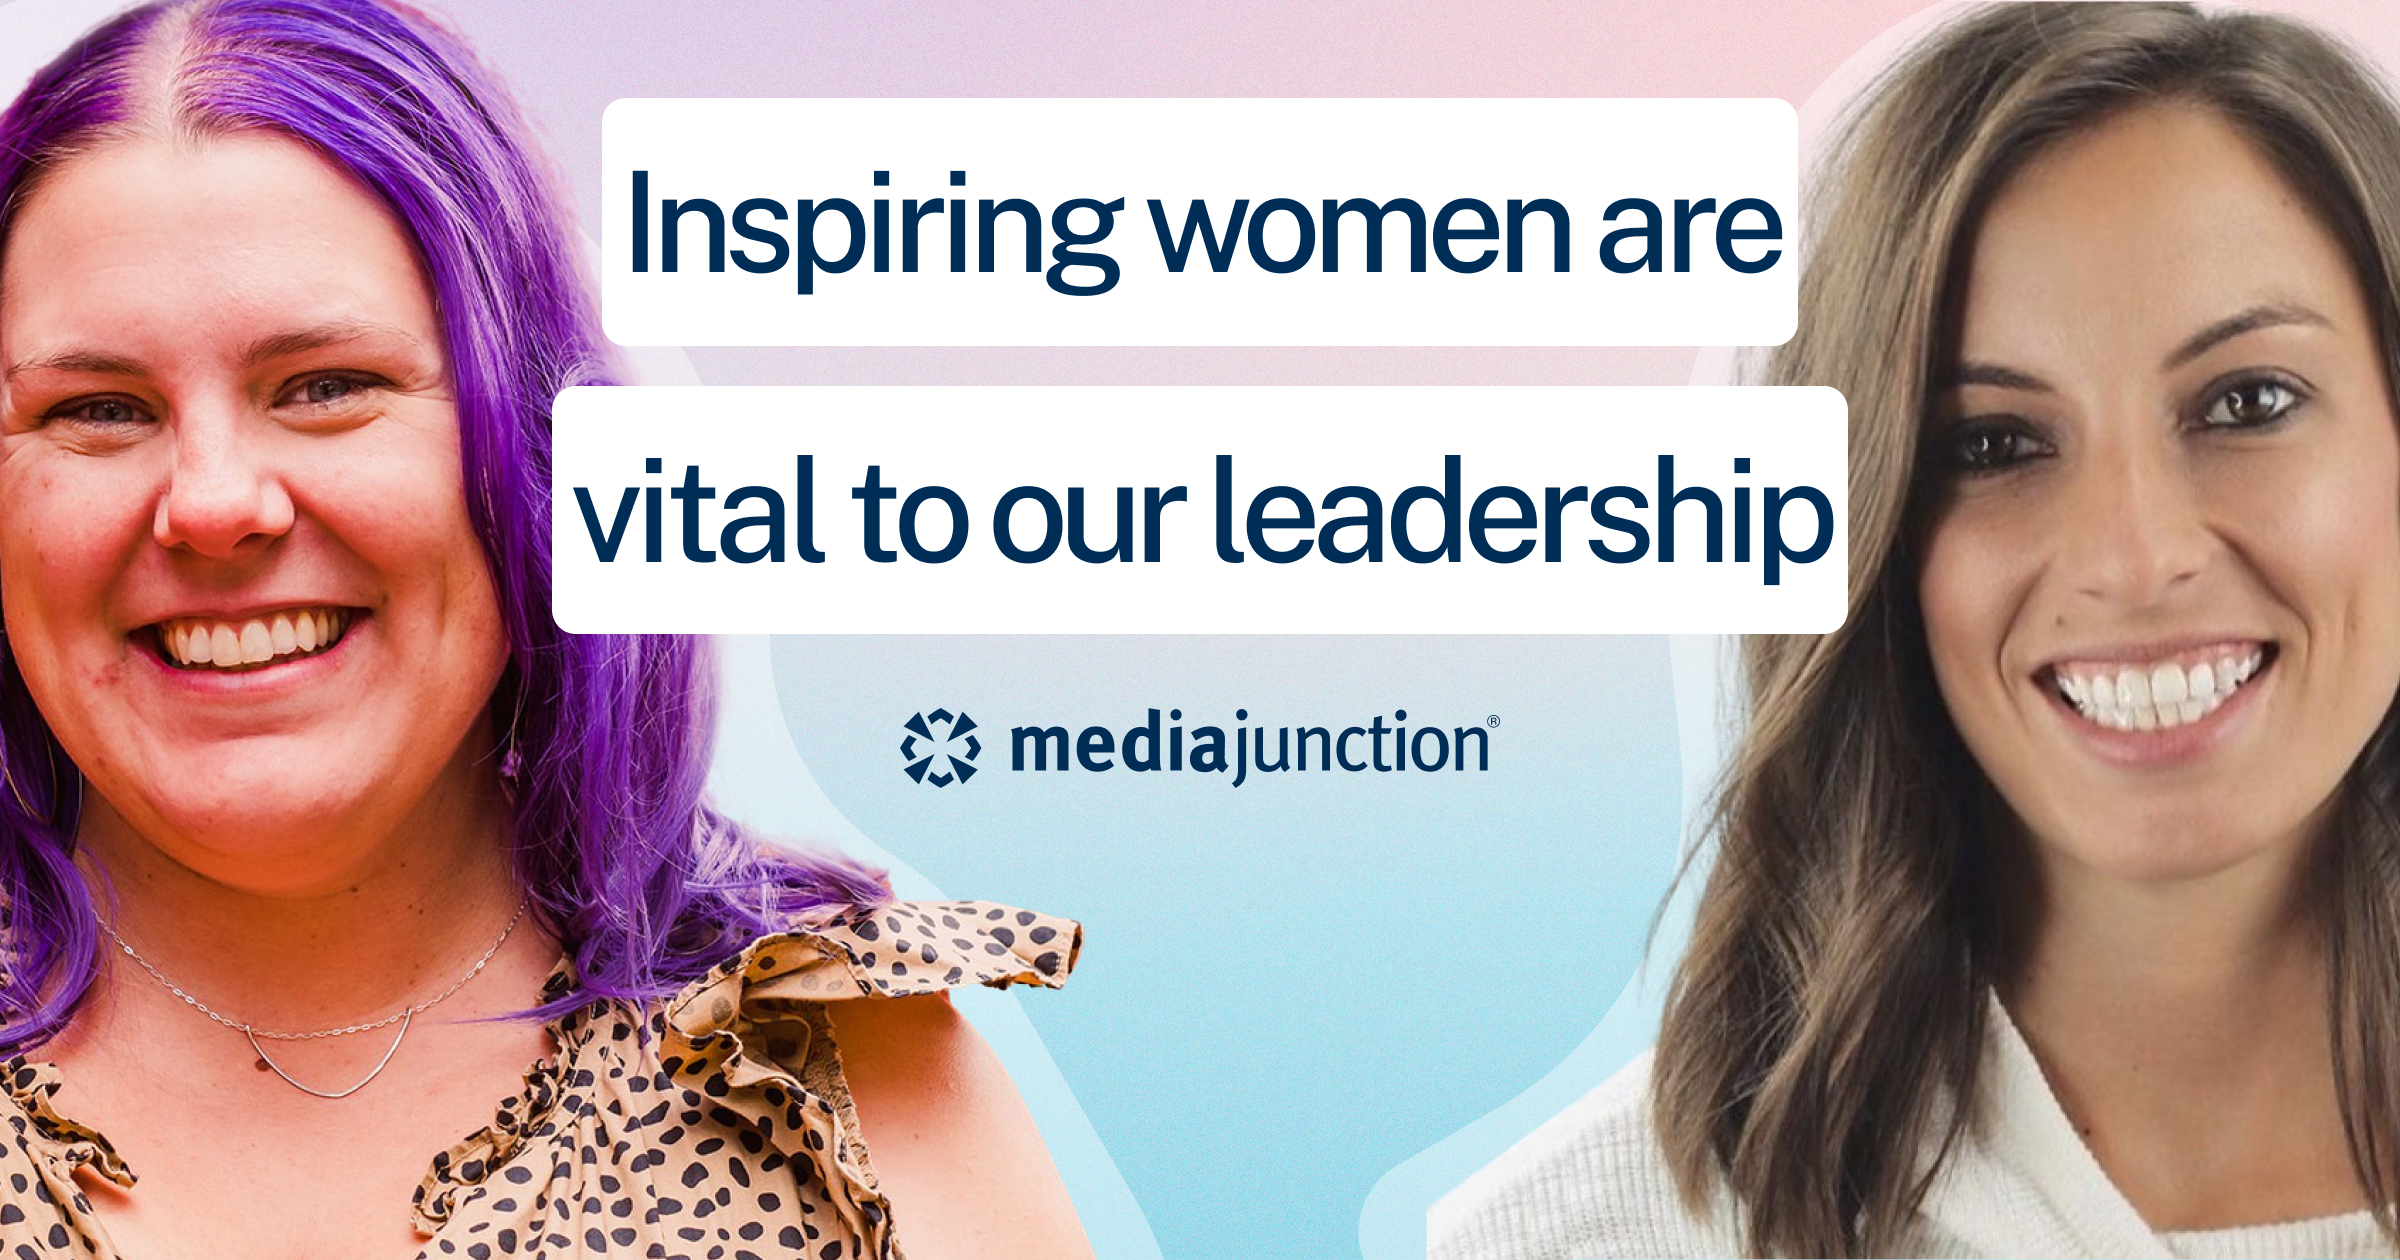 women-in-leadership-1200x630-2@2x